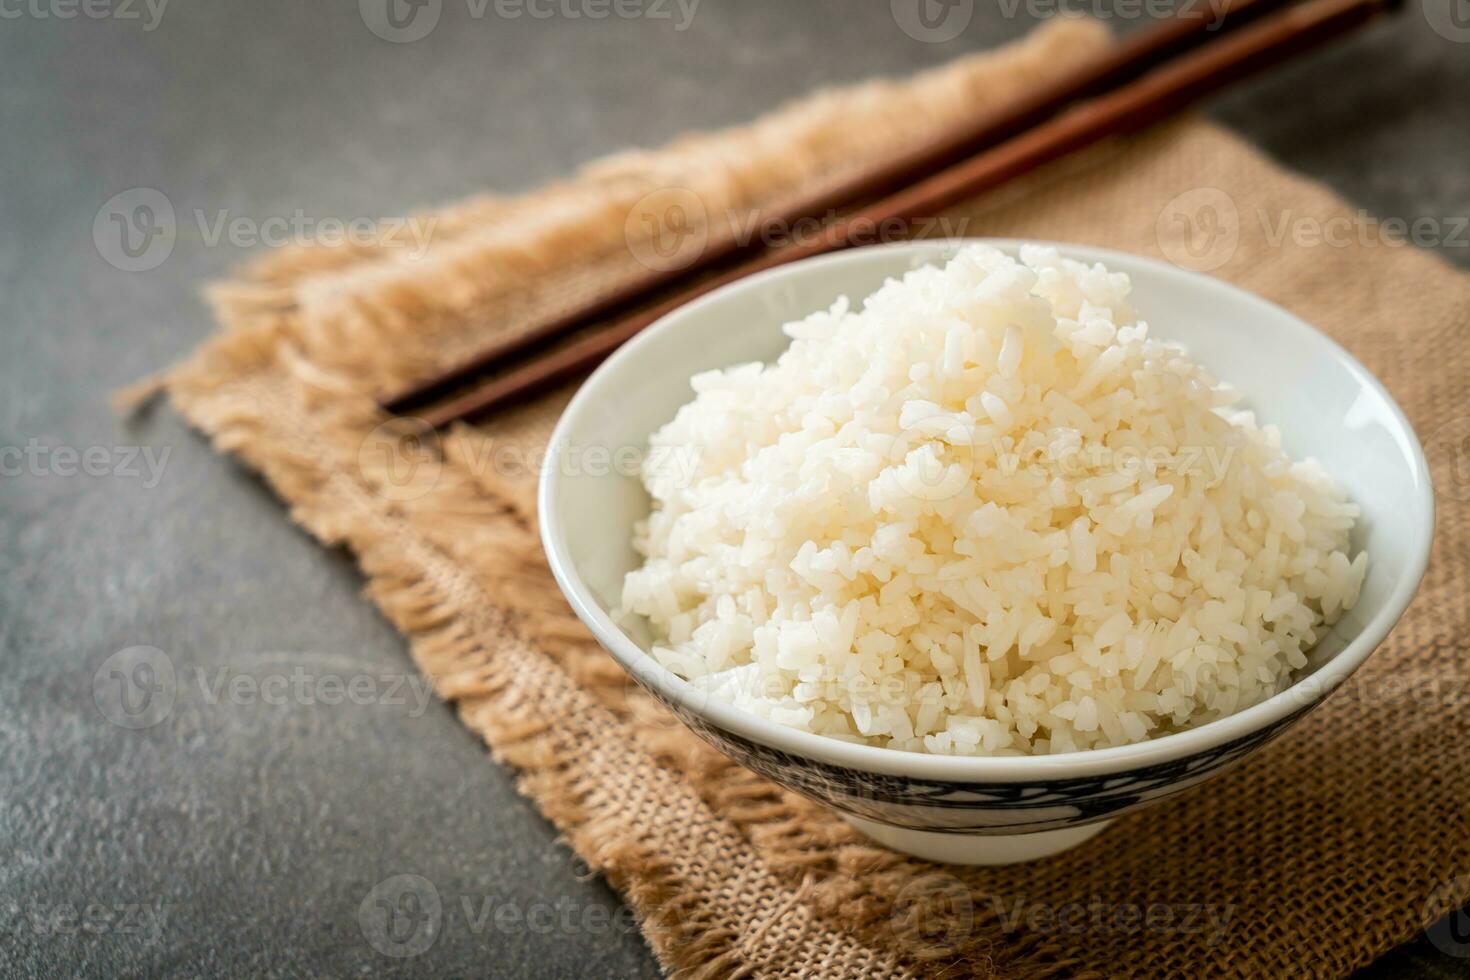 gekochte weiße Reisschüssel foto